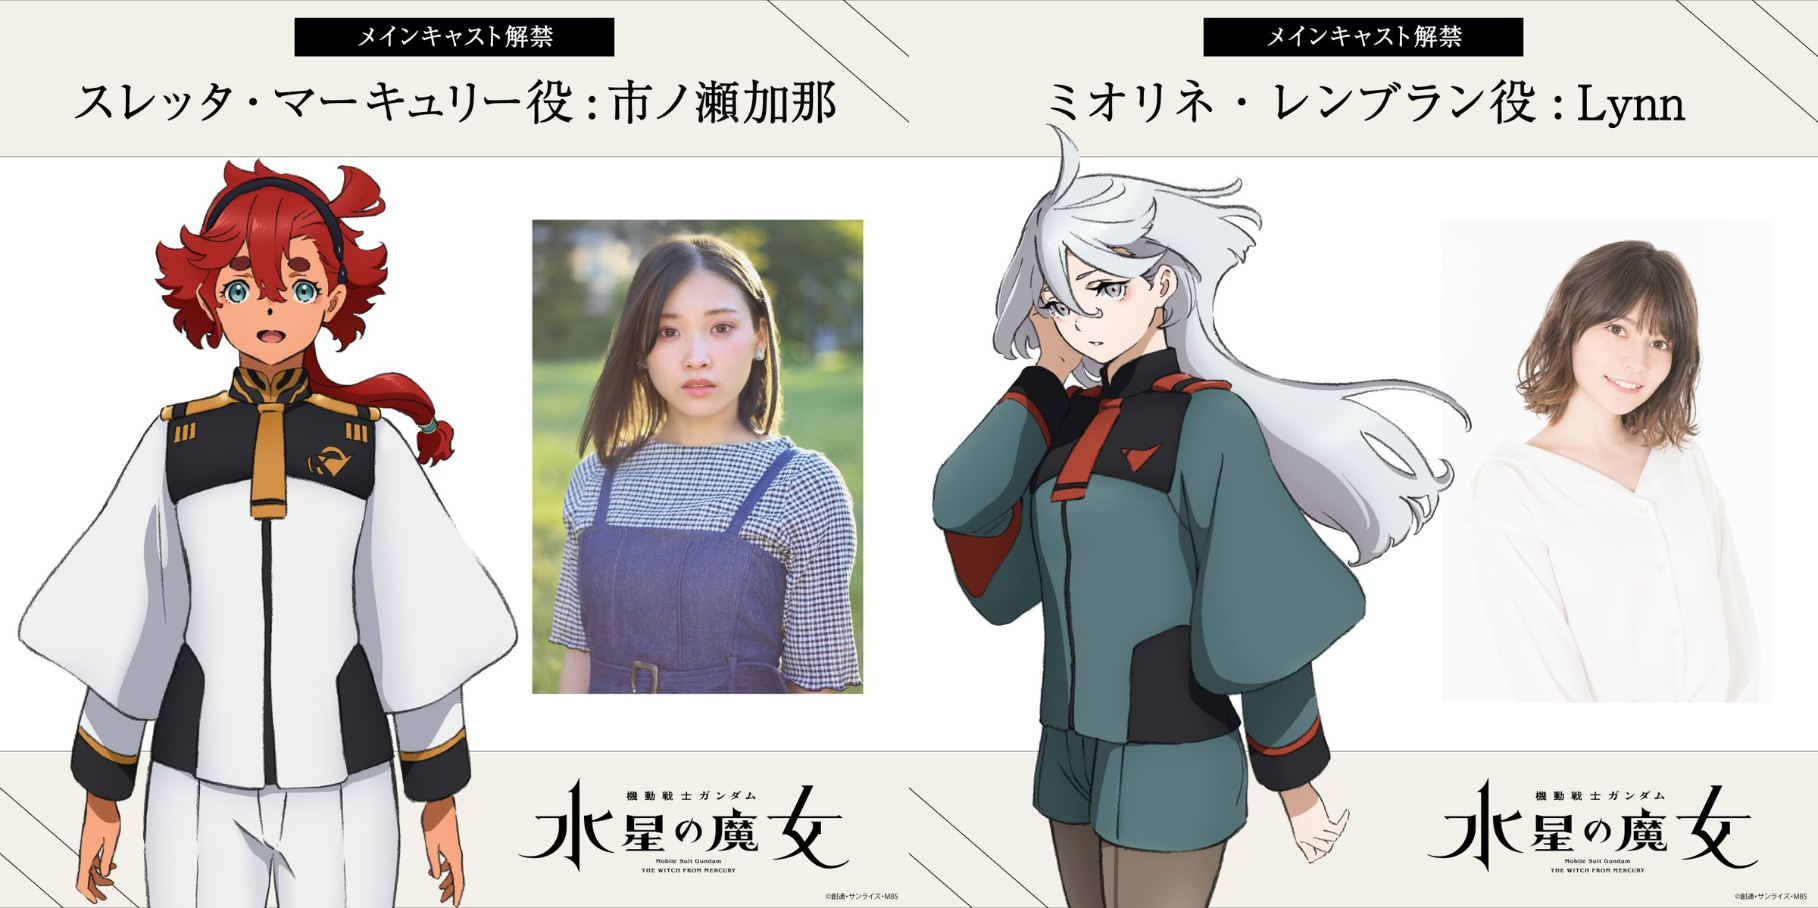 Gundam Witch Two Voice Cast Kana Ichinose and Lynn